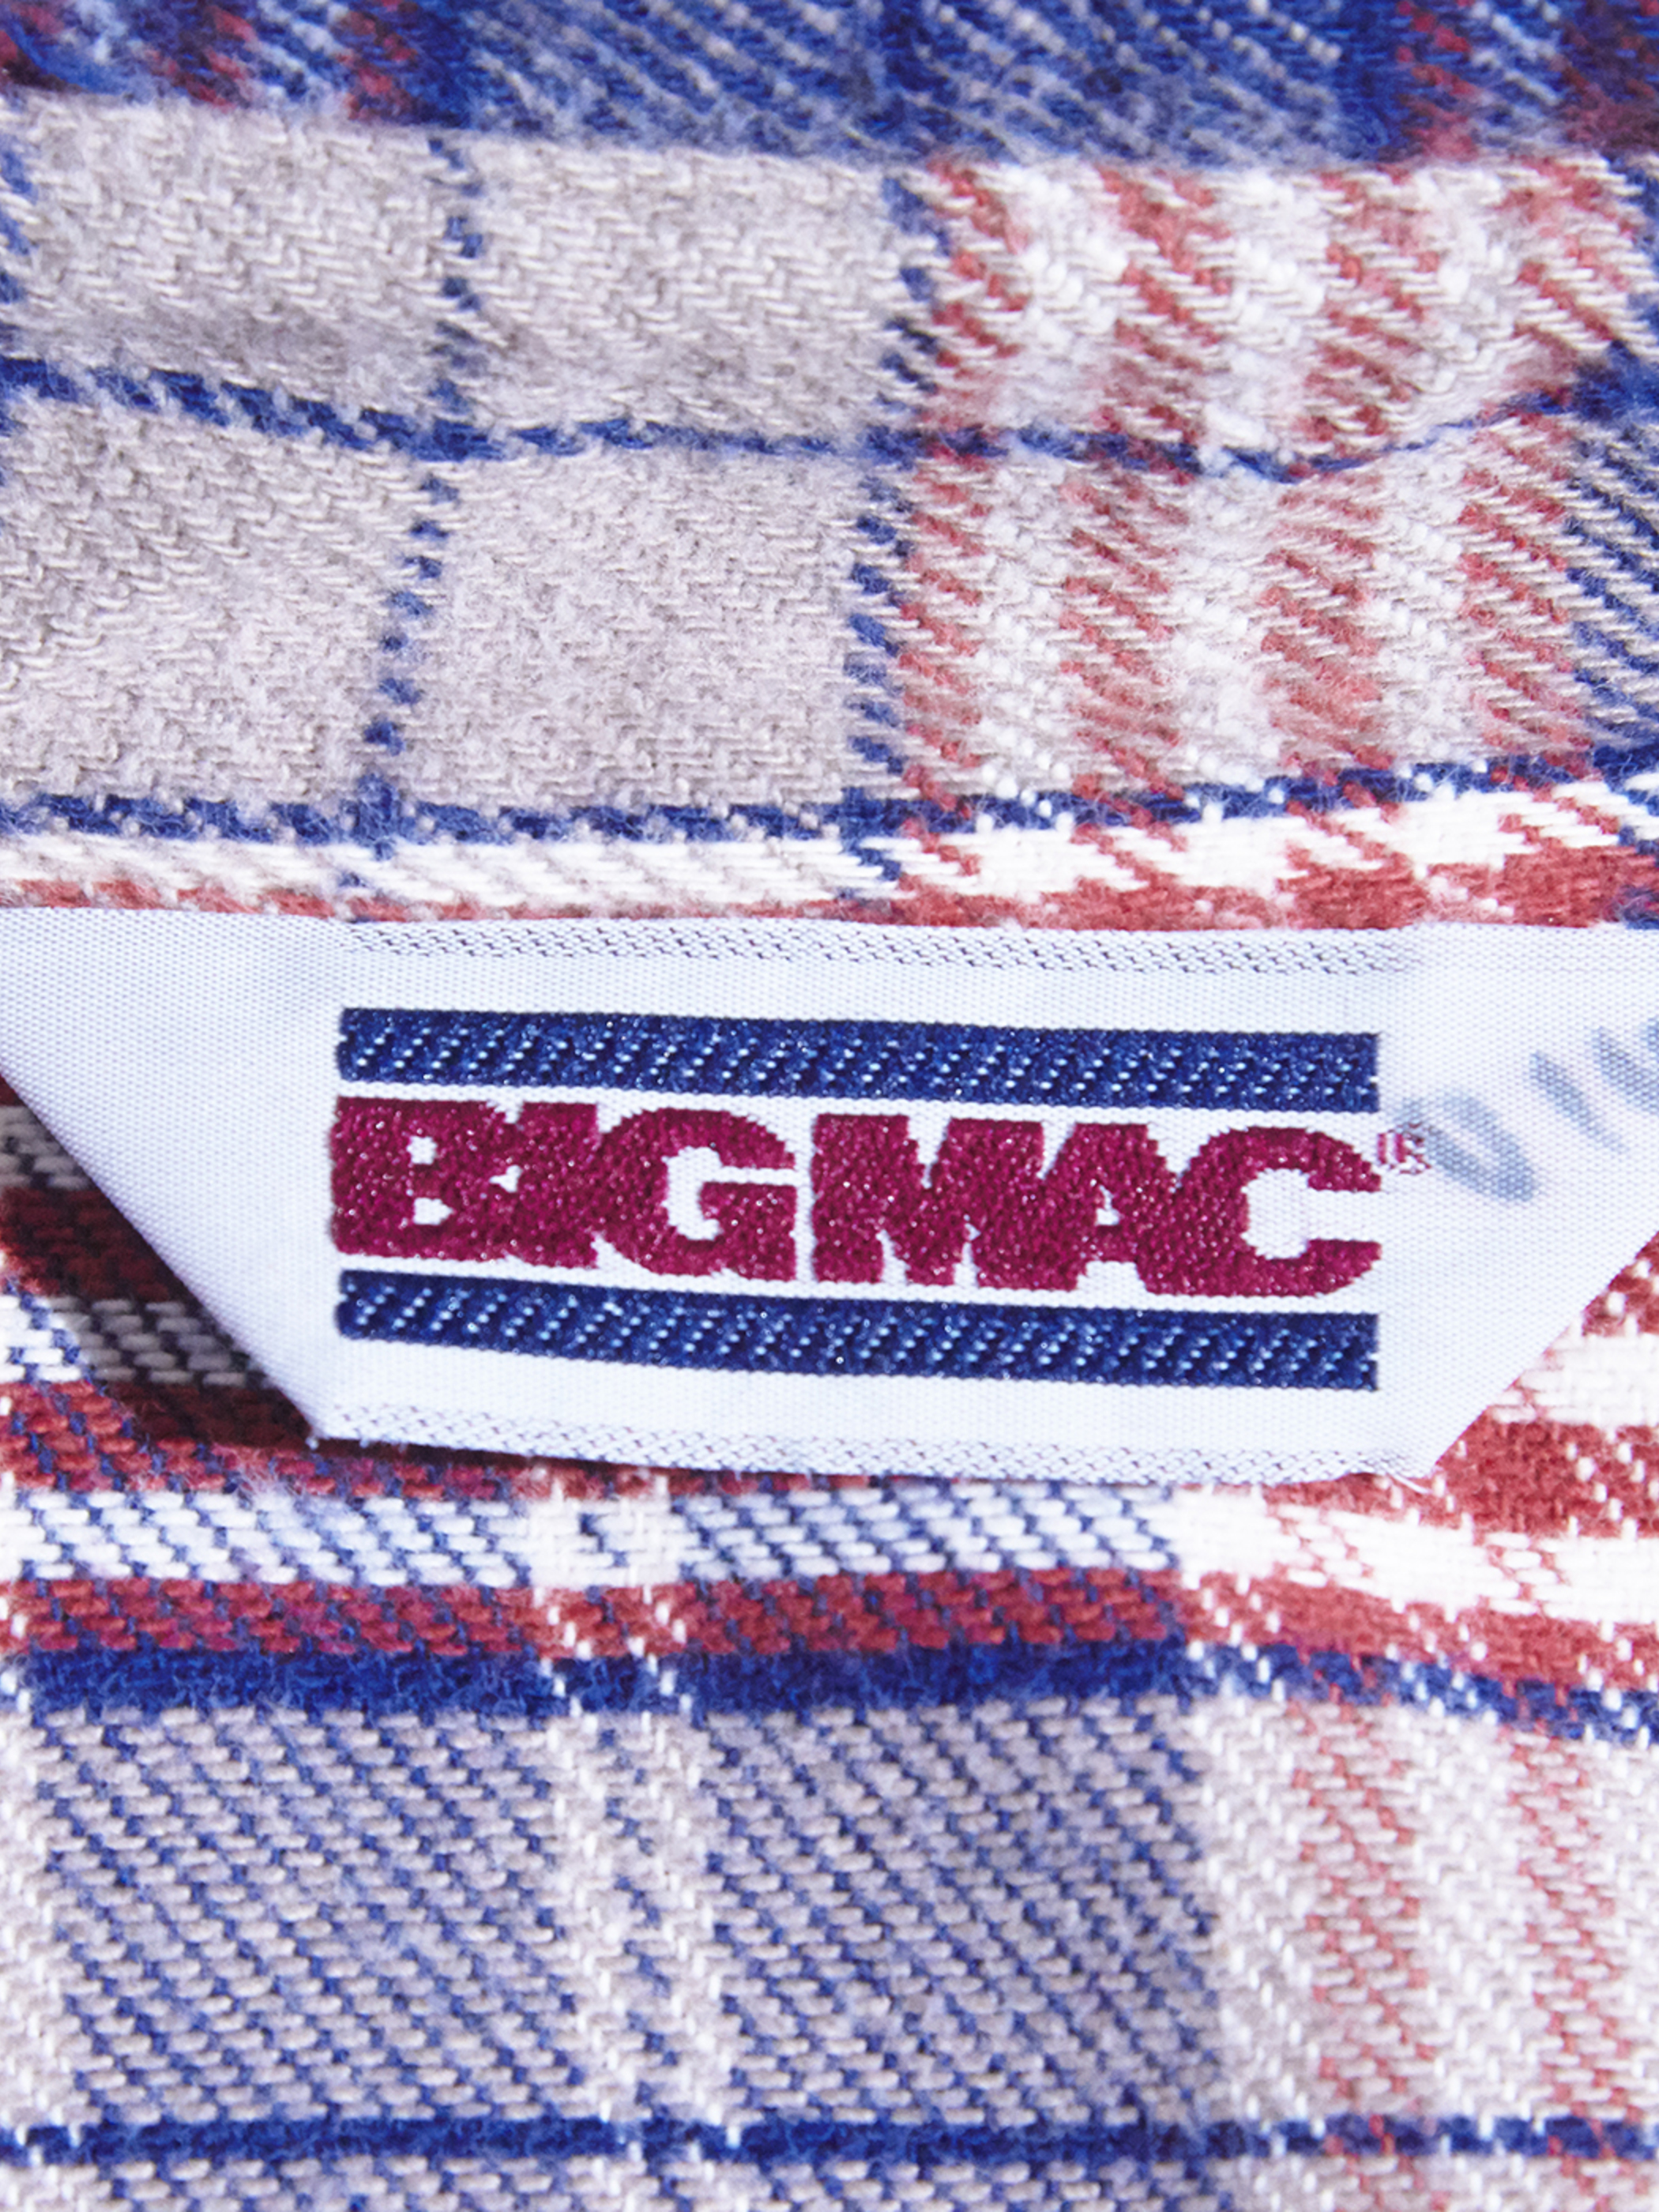 1980s "BIG MAC" flannel check shirt -BLUE-